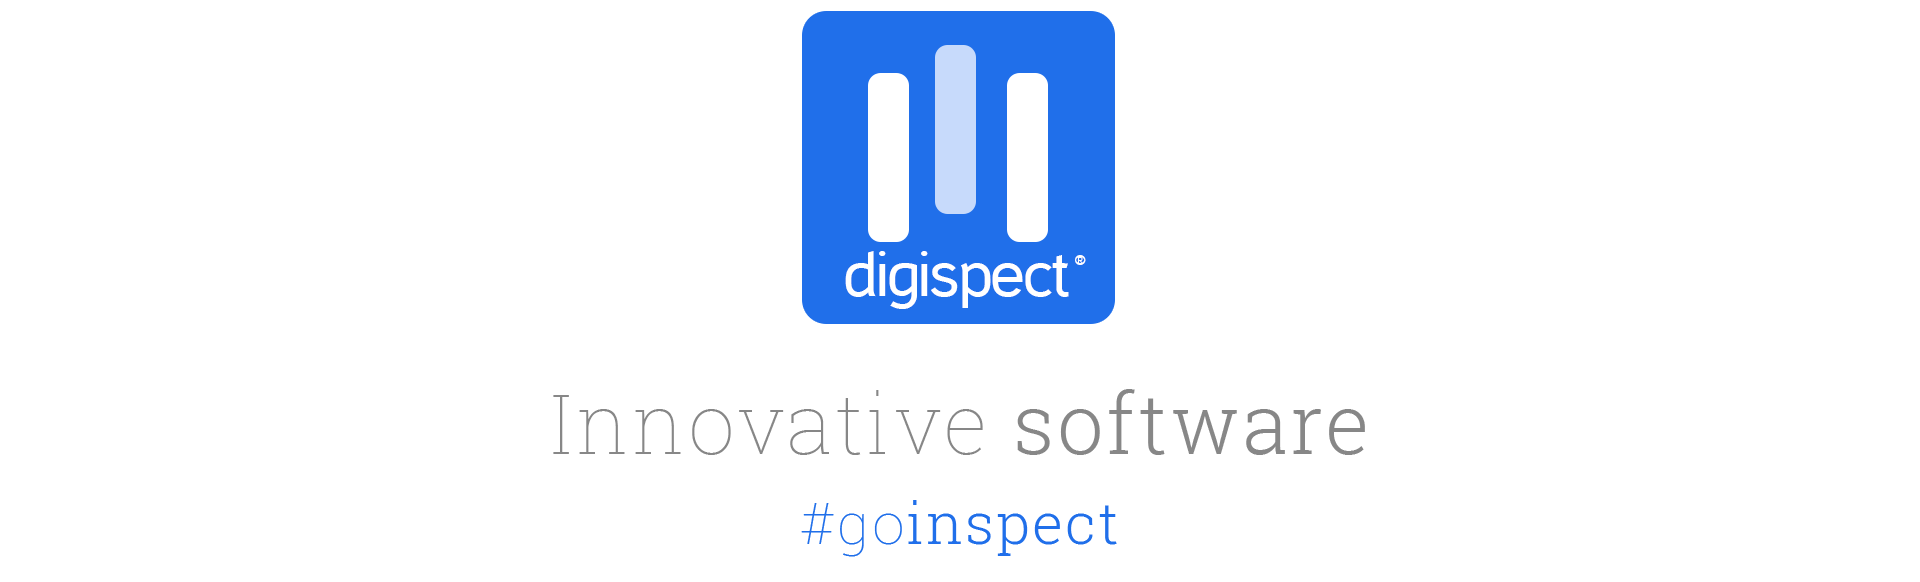 Digispect Innovative Software